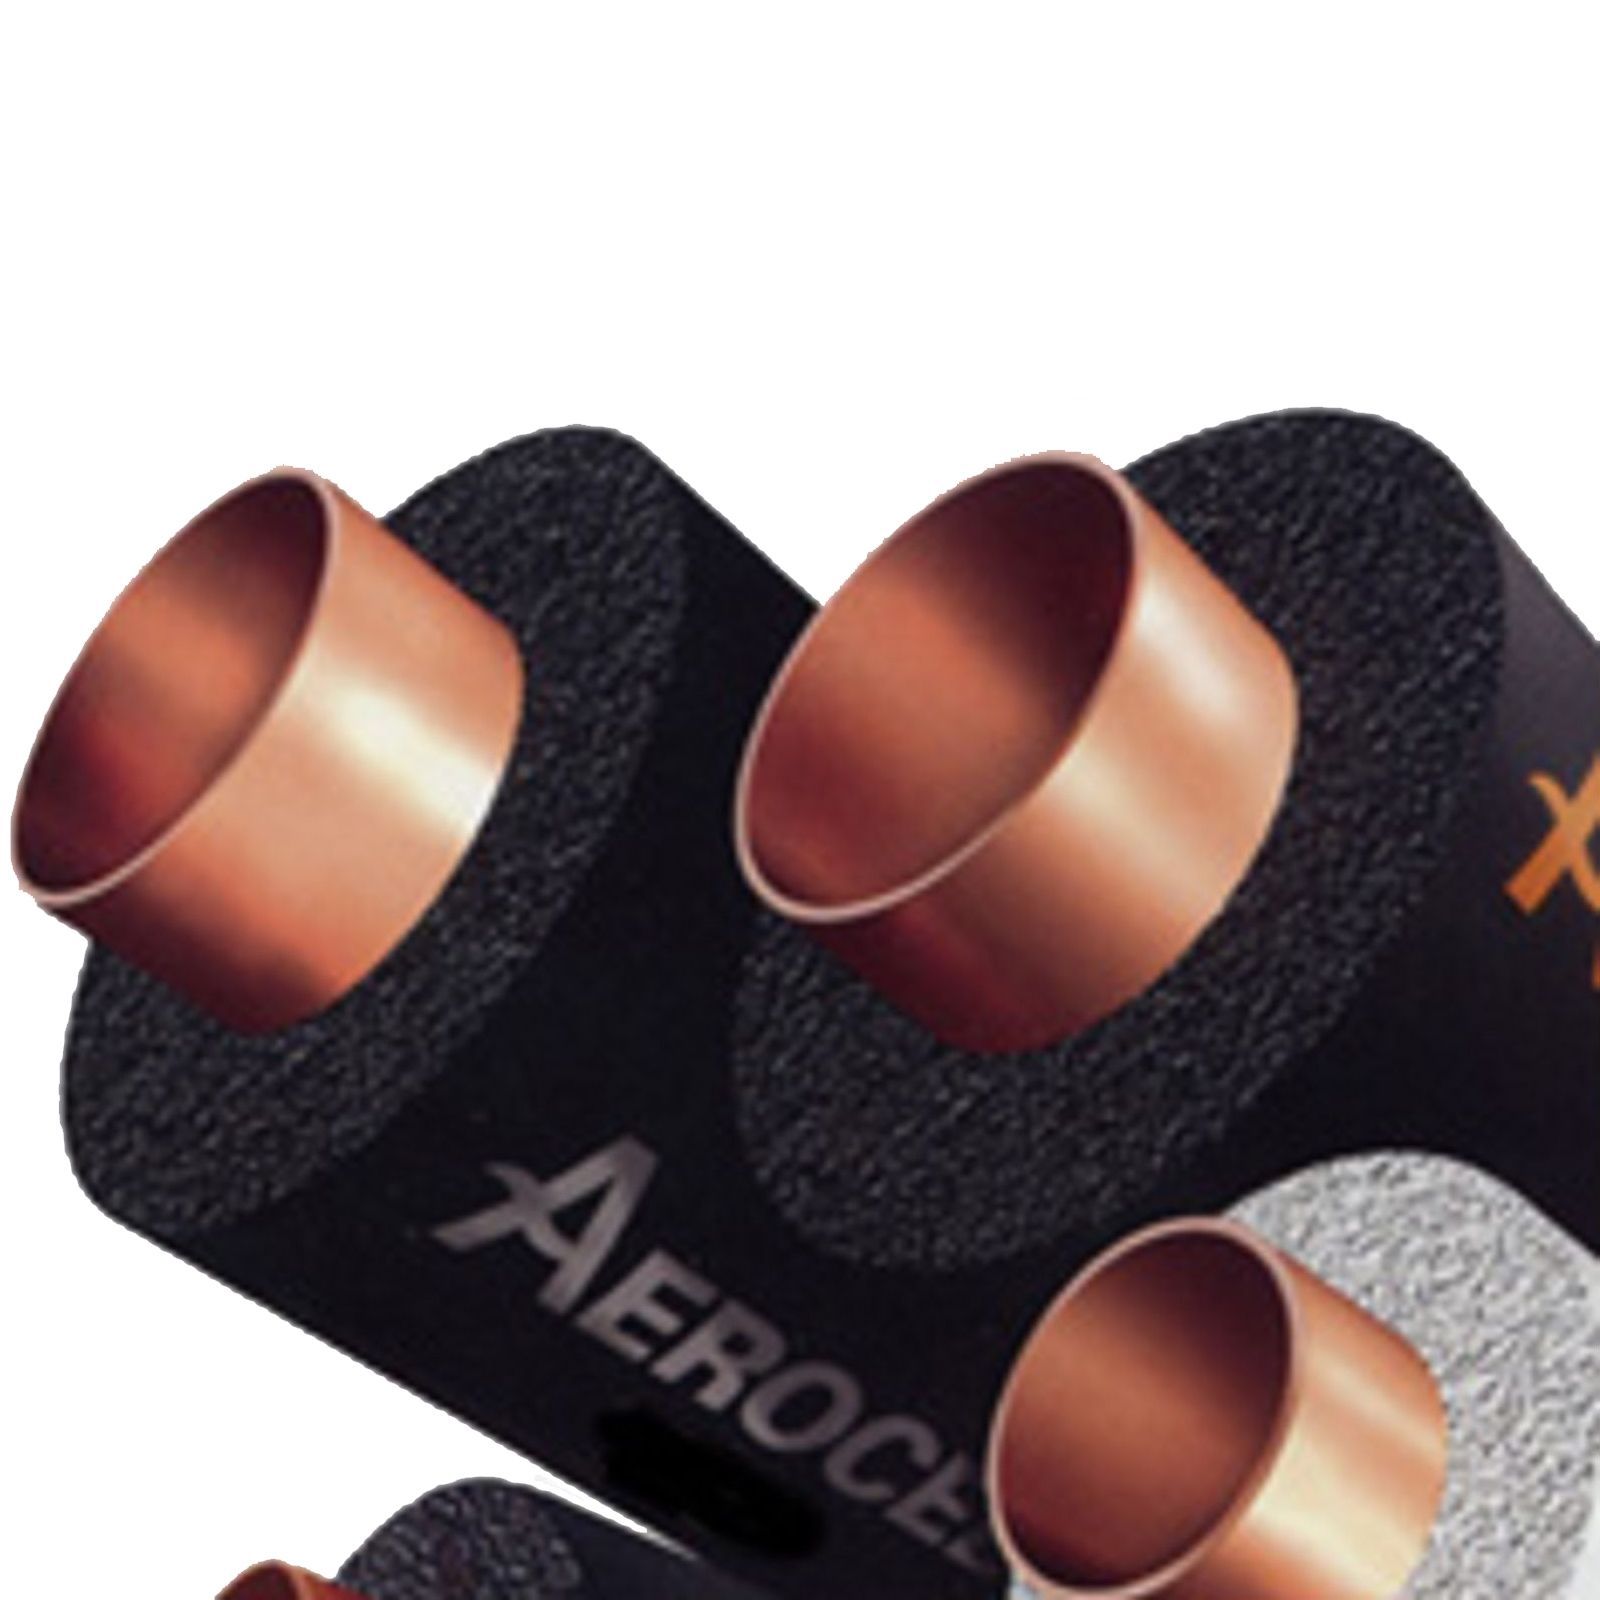 Aeroflex 202-AC3838 - AC EPDM Elastomeric Tubing Insulation, 3/8" ID X 3/8" Wall Thickness, Fits 3/8" OD Copper Tubing